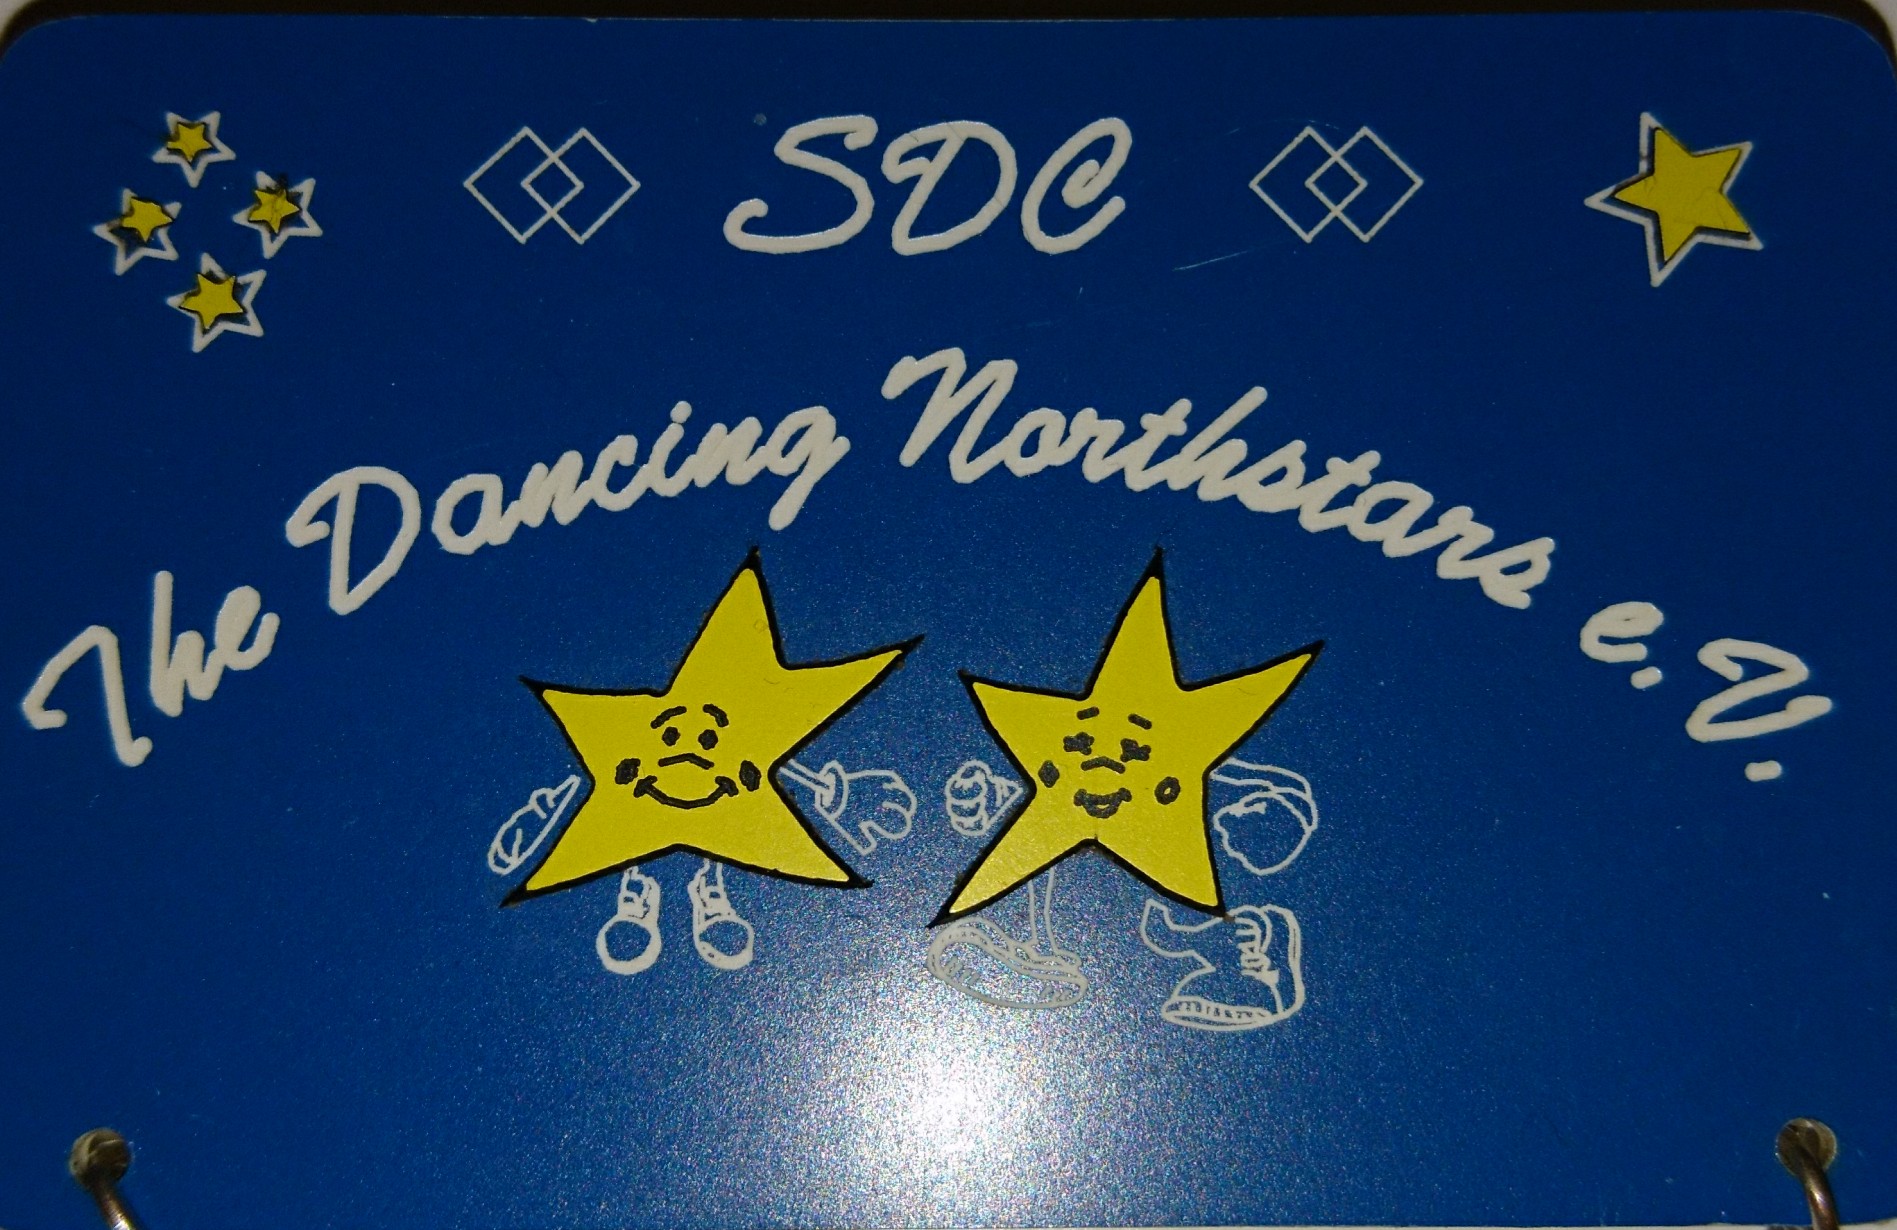 Logo Dancing Northstars e.V. Flensburg macht Spass